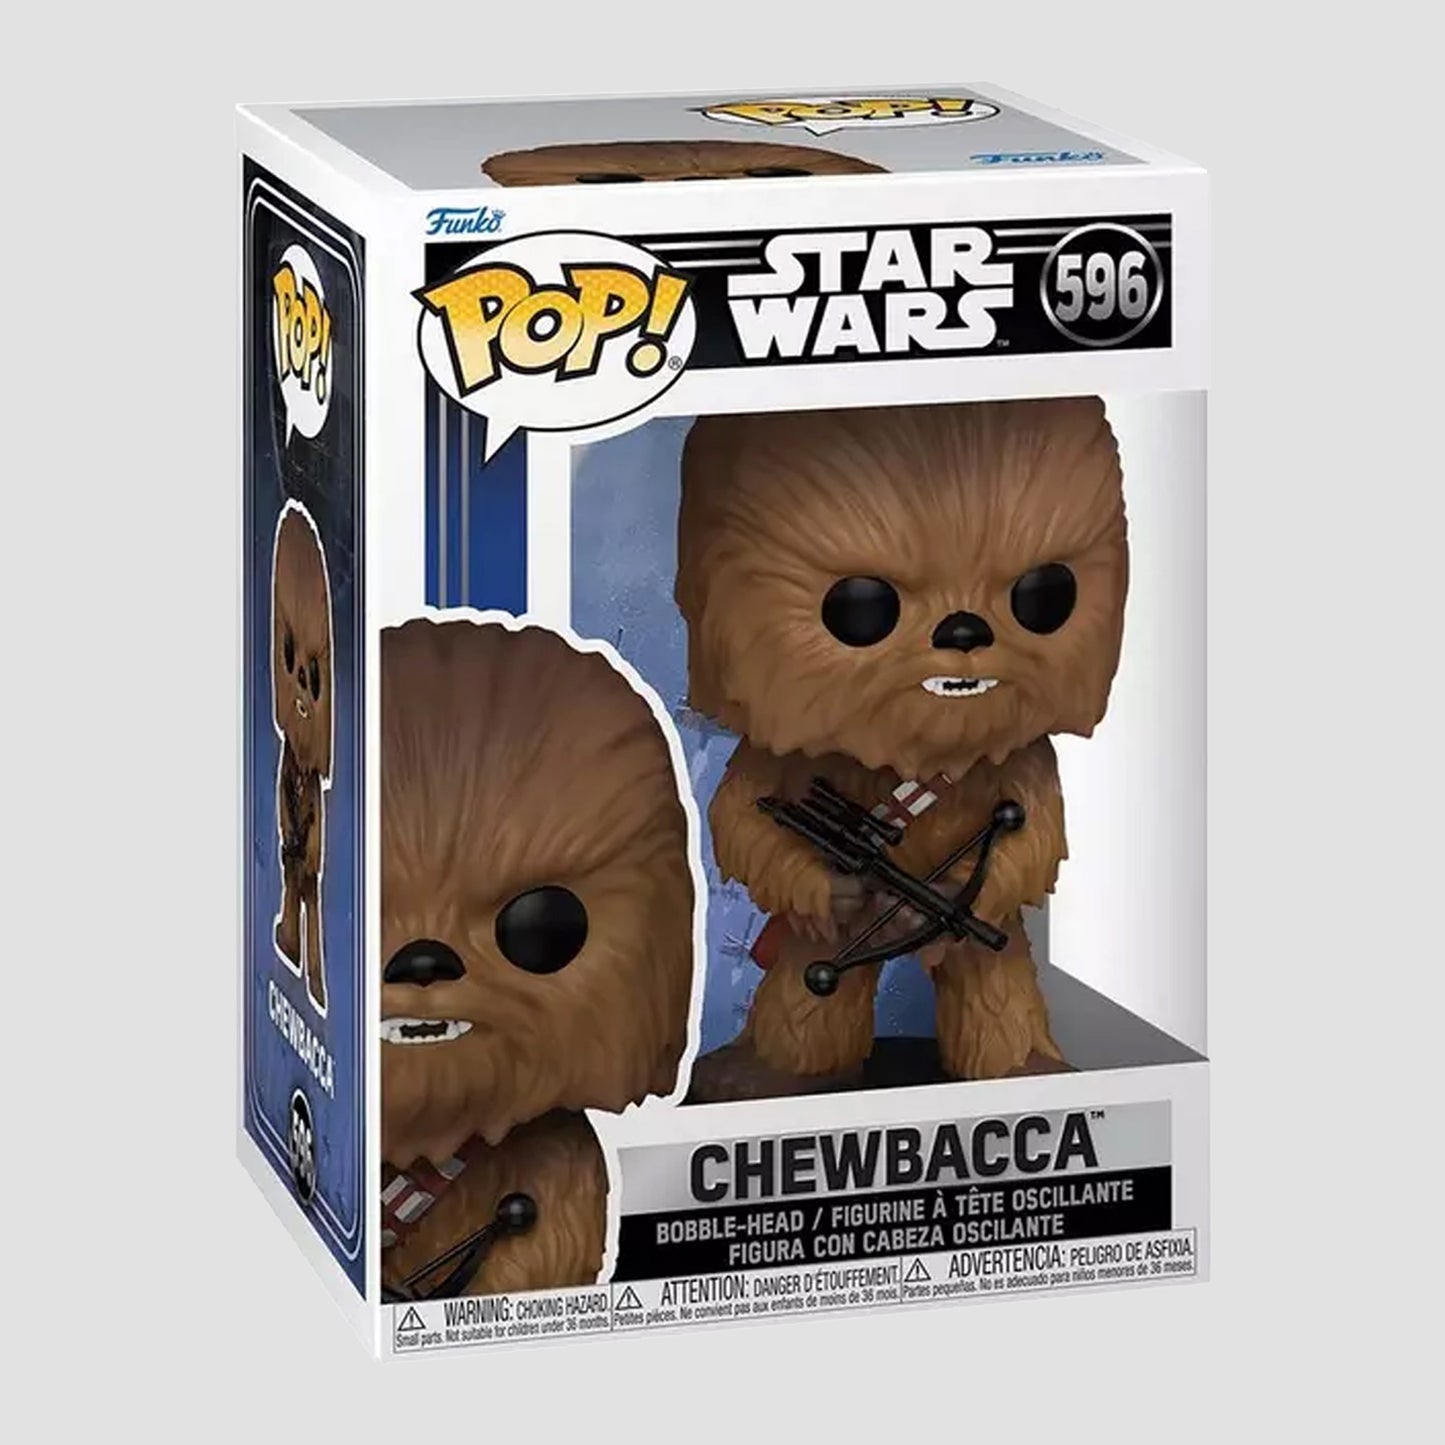 Chewbacca (Star Wars Episode IV: A New Hope) Funko Pop!